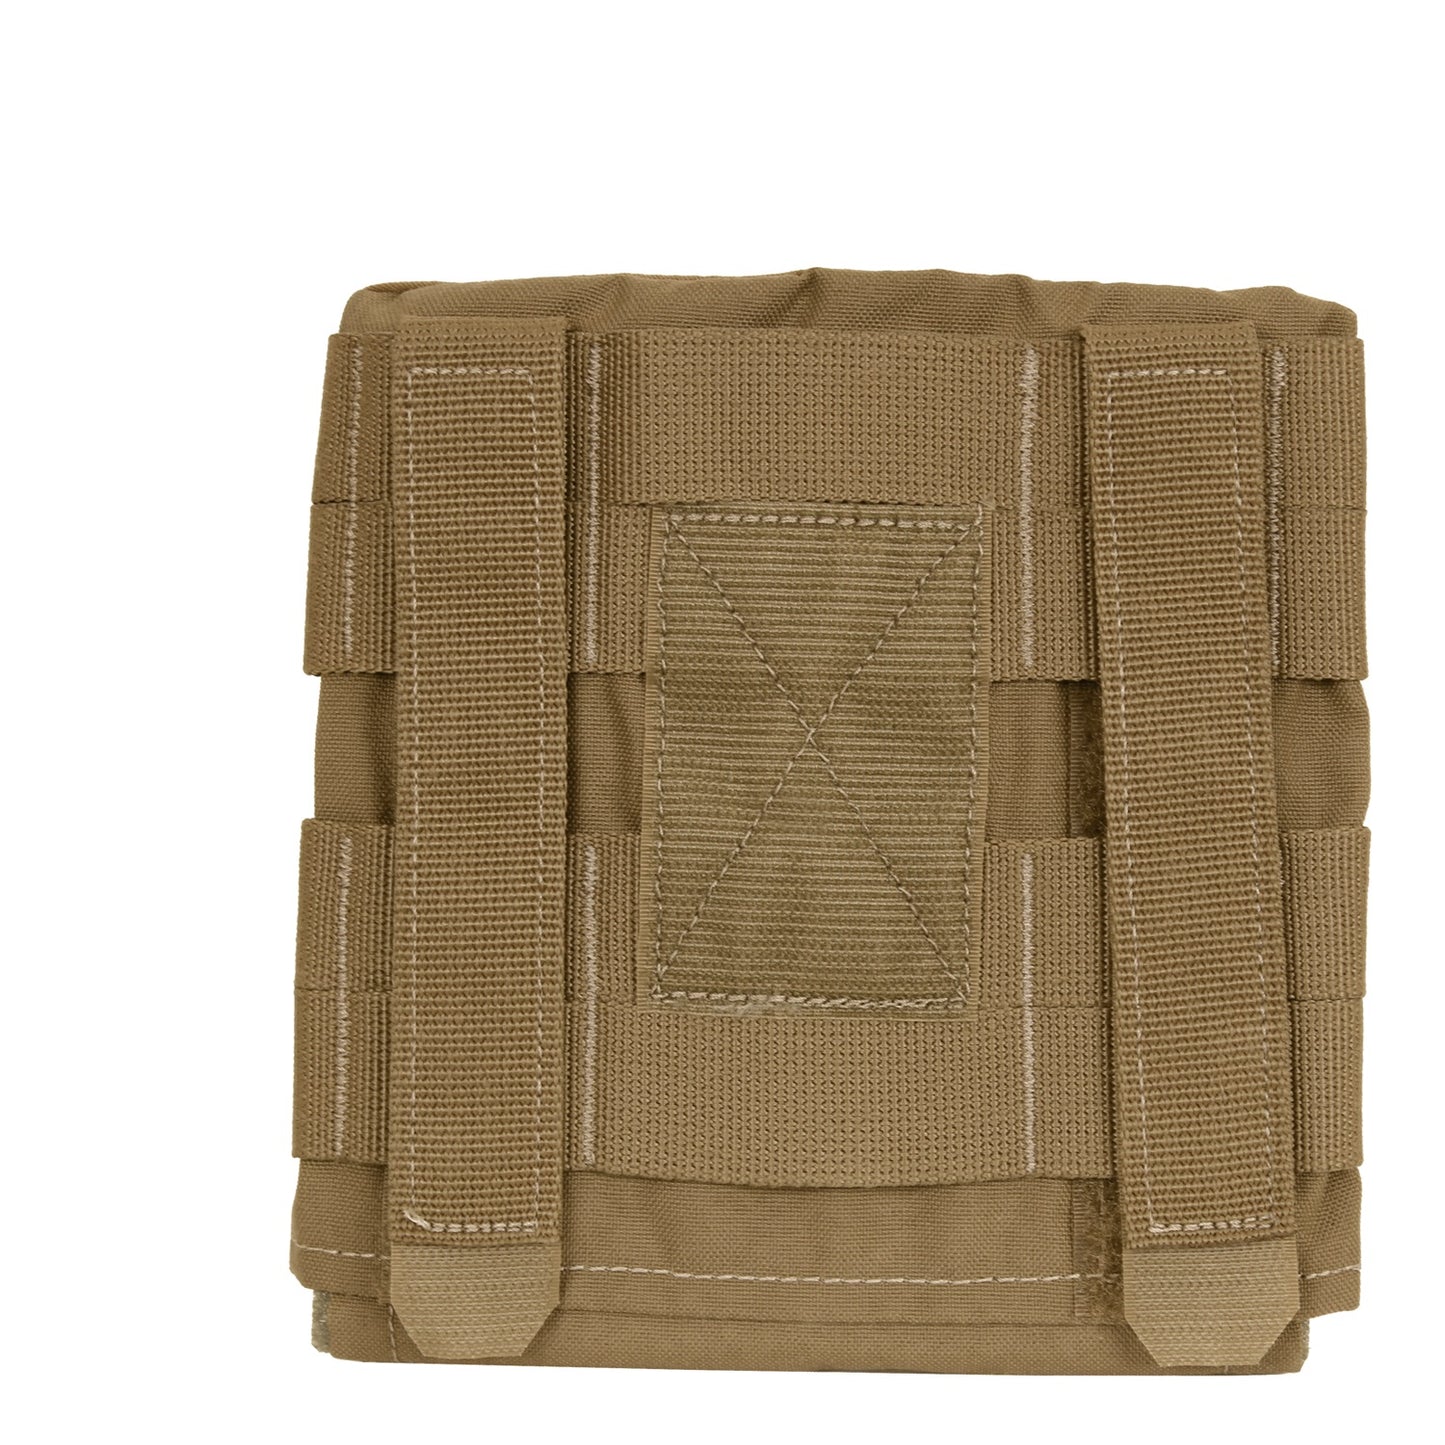 5729 - LACV (Lightweight Armor Carrier Vest) Side Armor Pouch Set